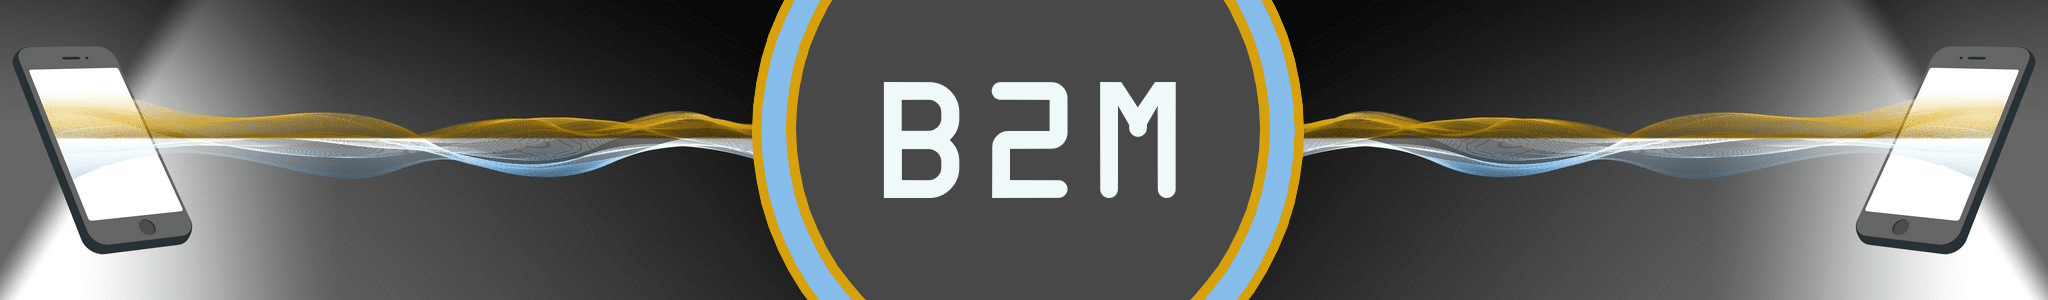 b2m business machine m